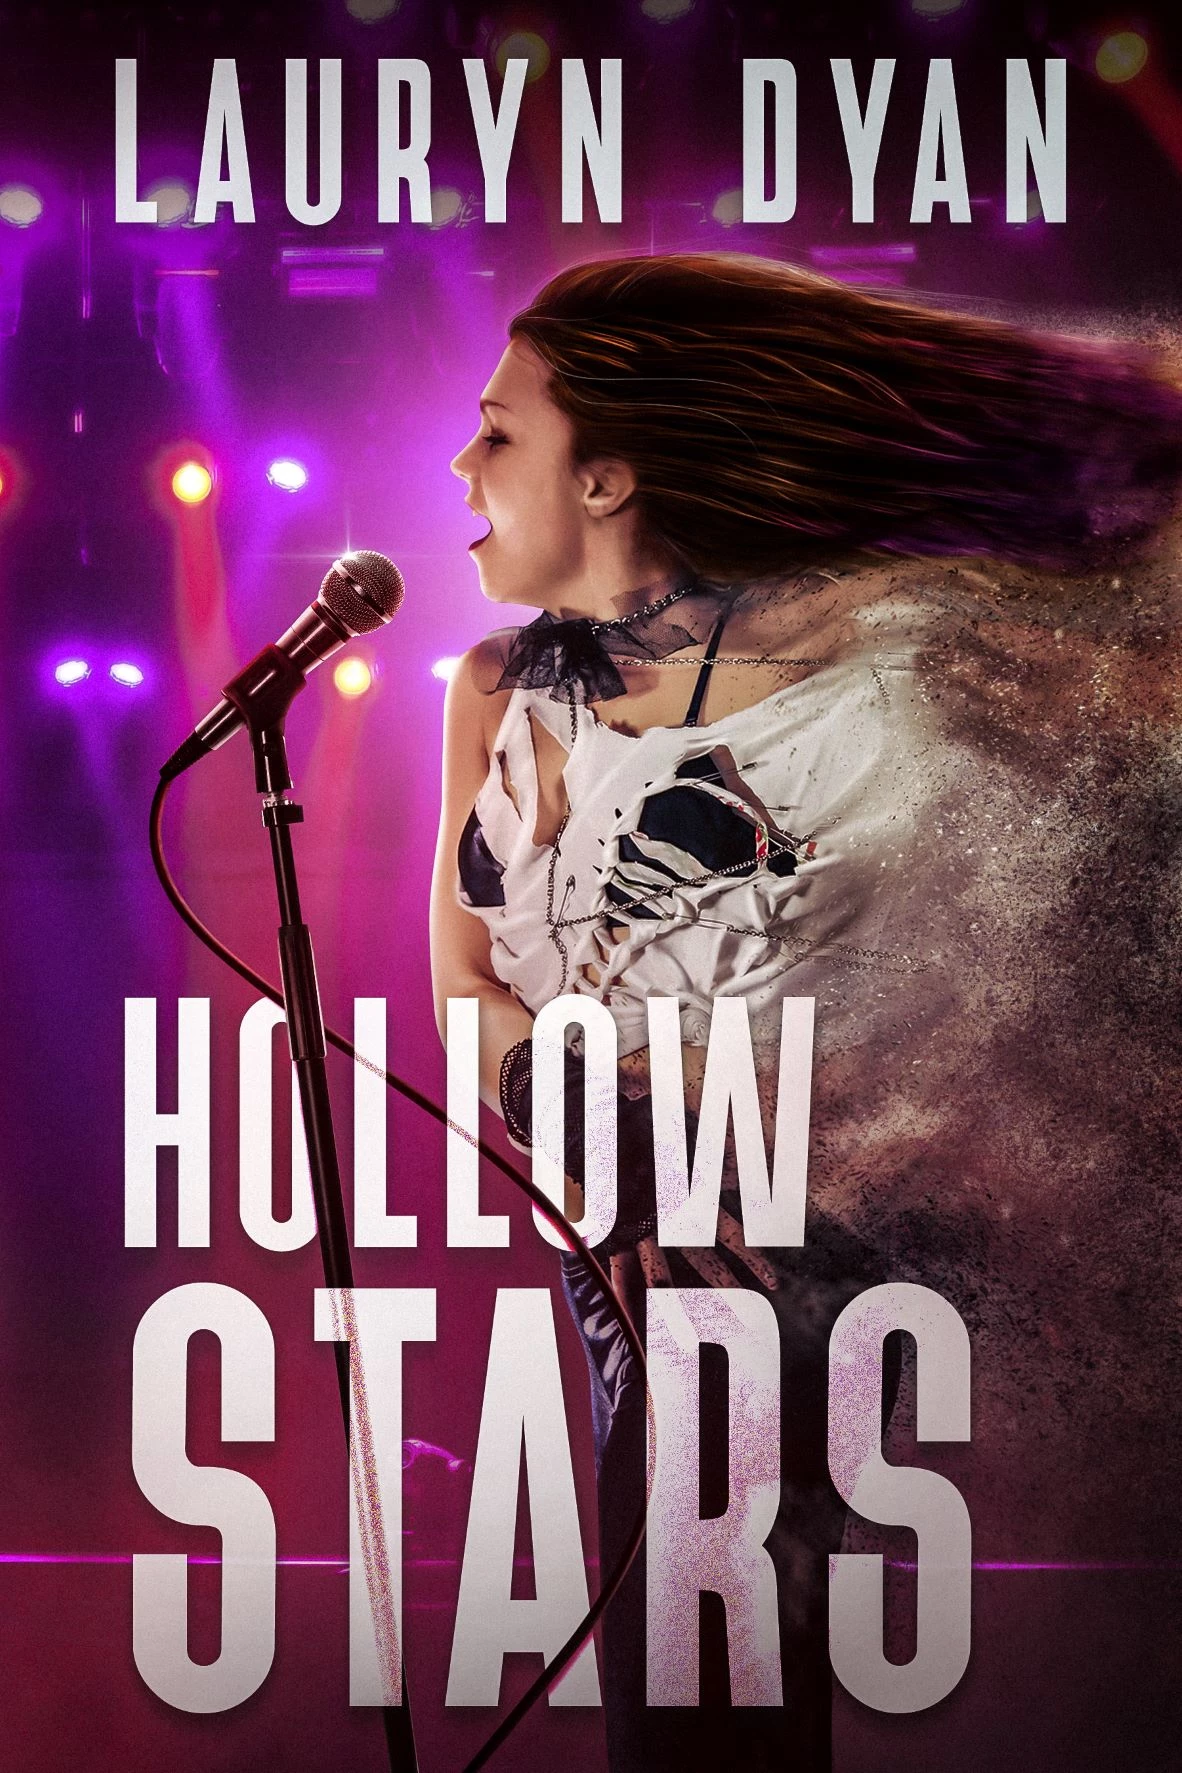 Hollow Stars